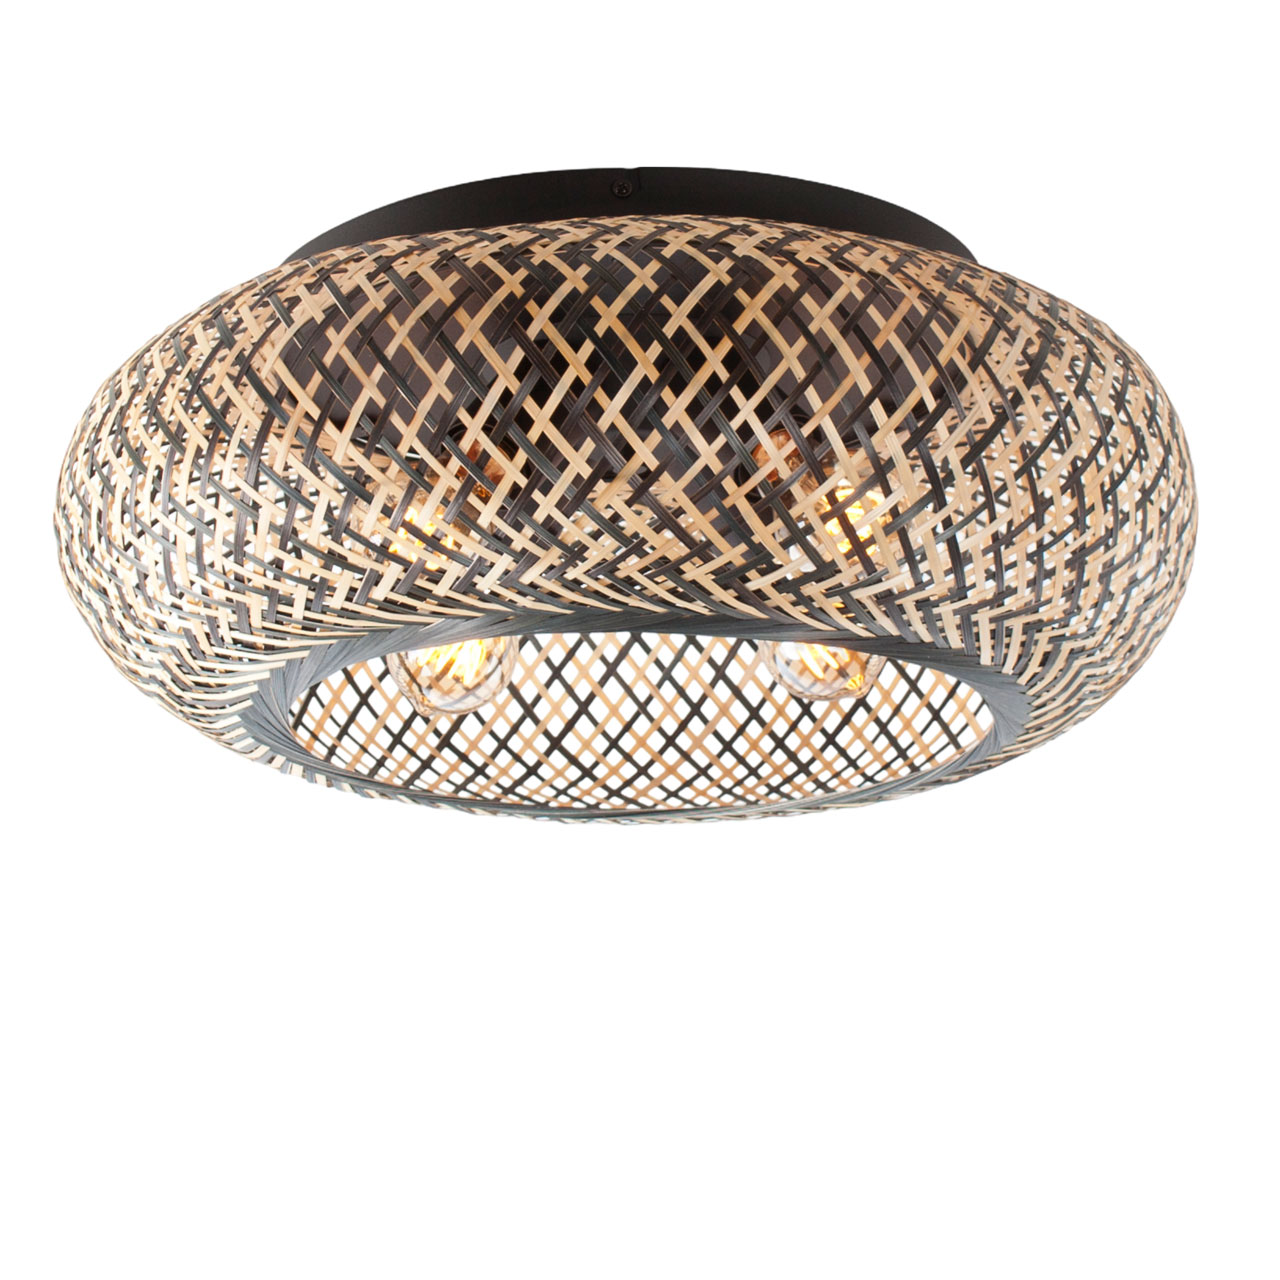 Rotan plafondlamp | 4 lichts |Ø 50cm | naturel / zwart | hout / metaal | woonkamer / eettafel lamp